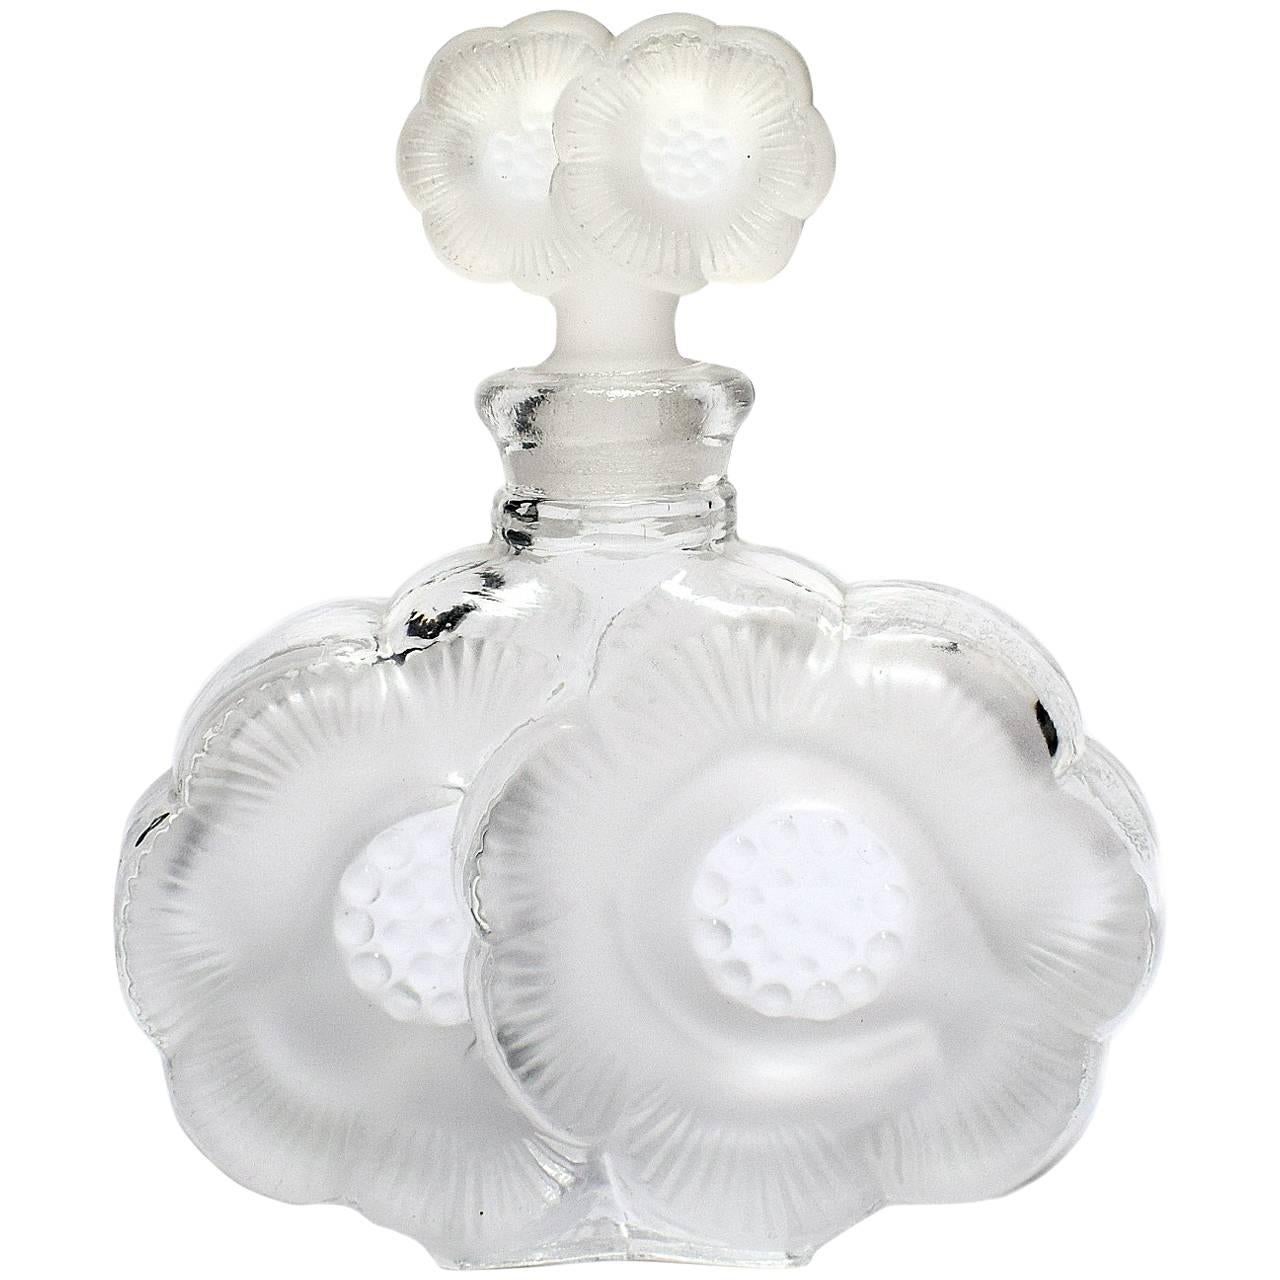 Original English Art Deco Perfume Bottle, 1930s